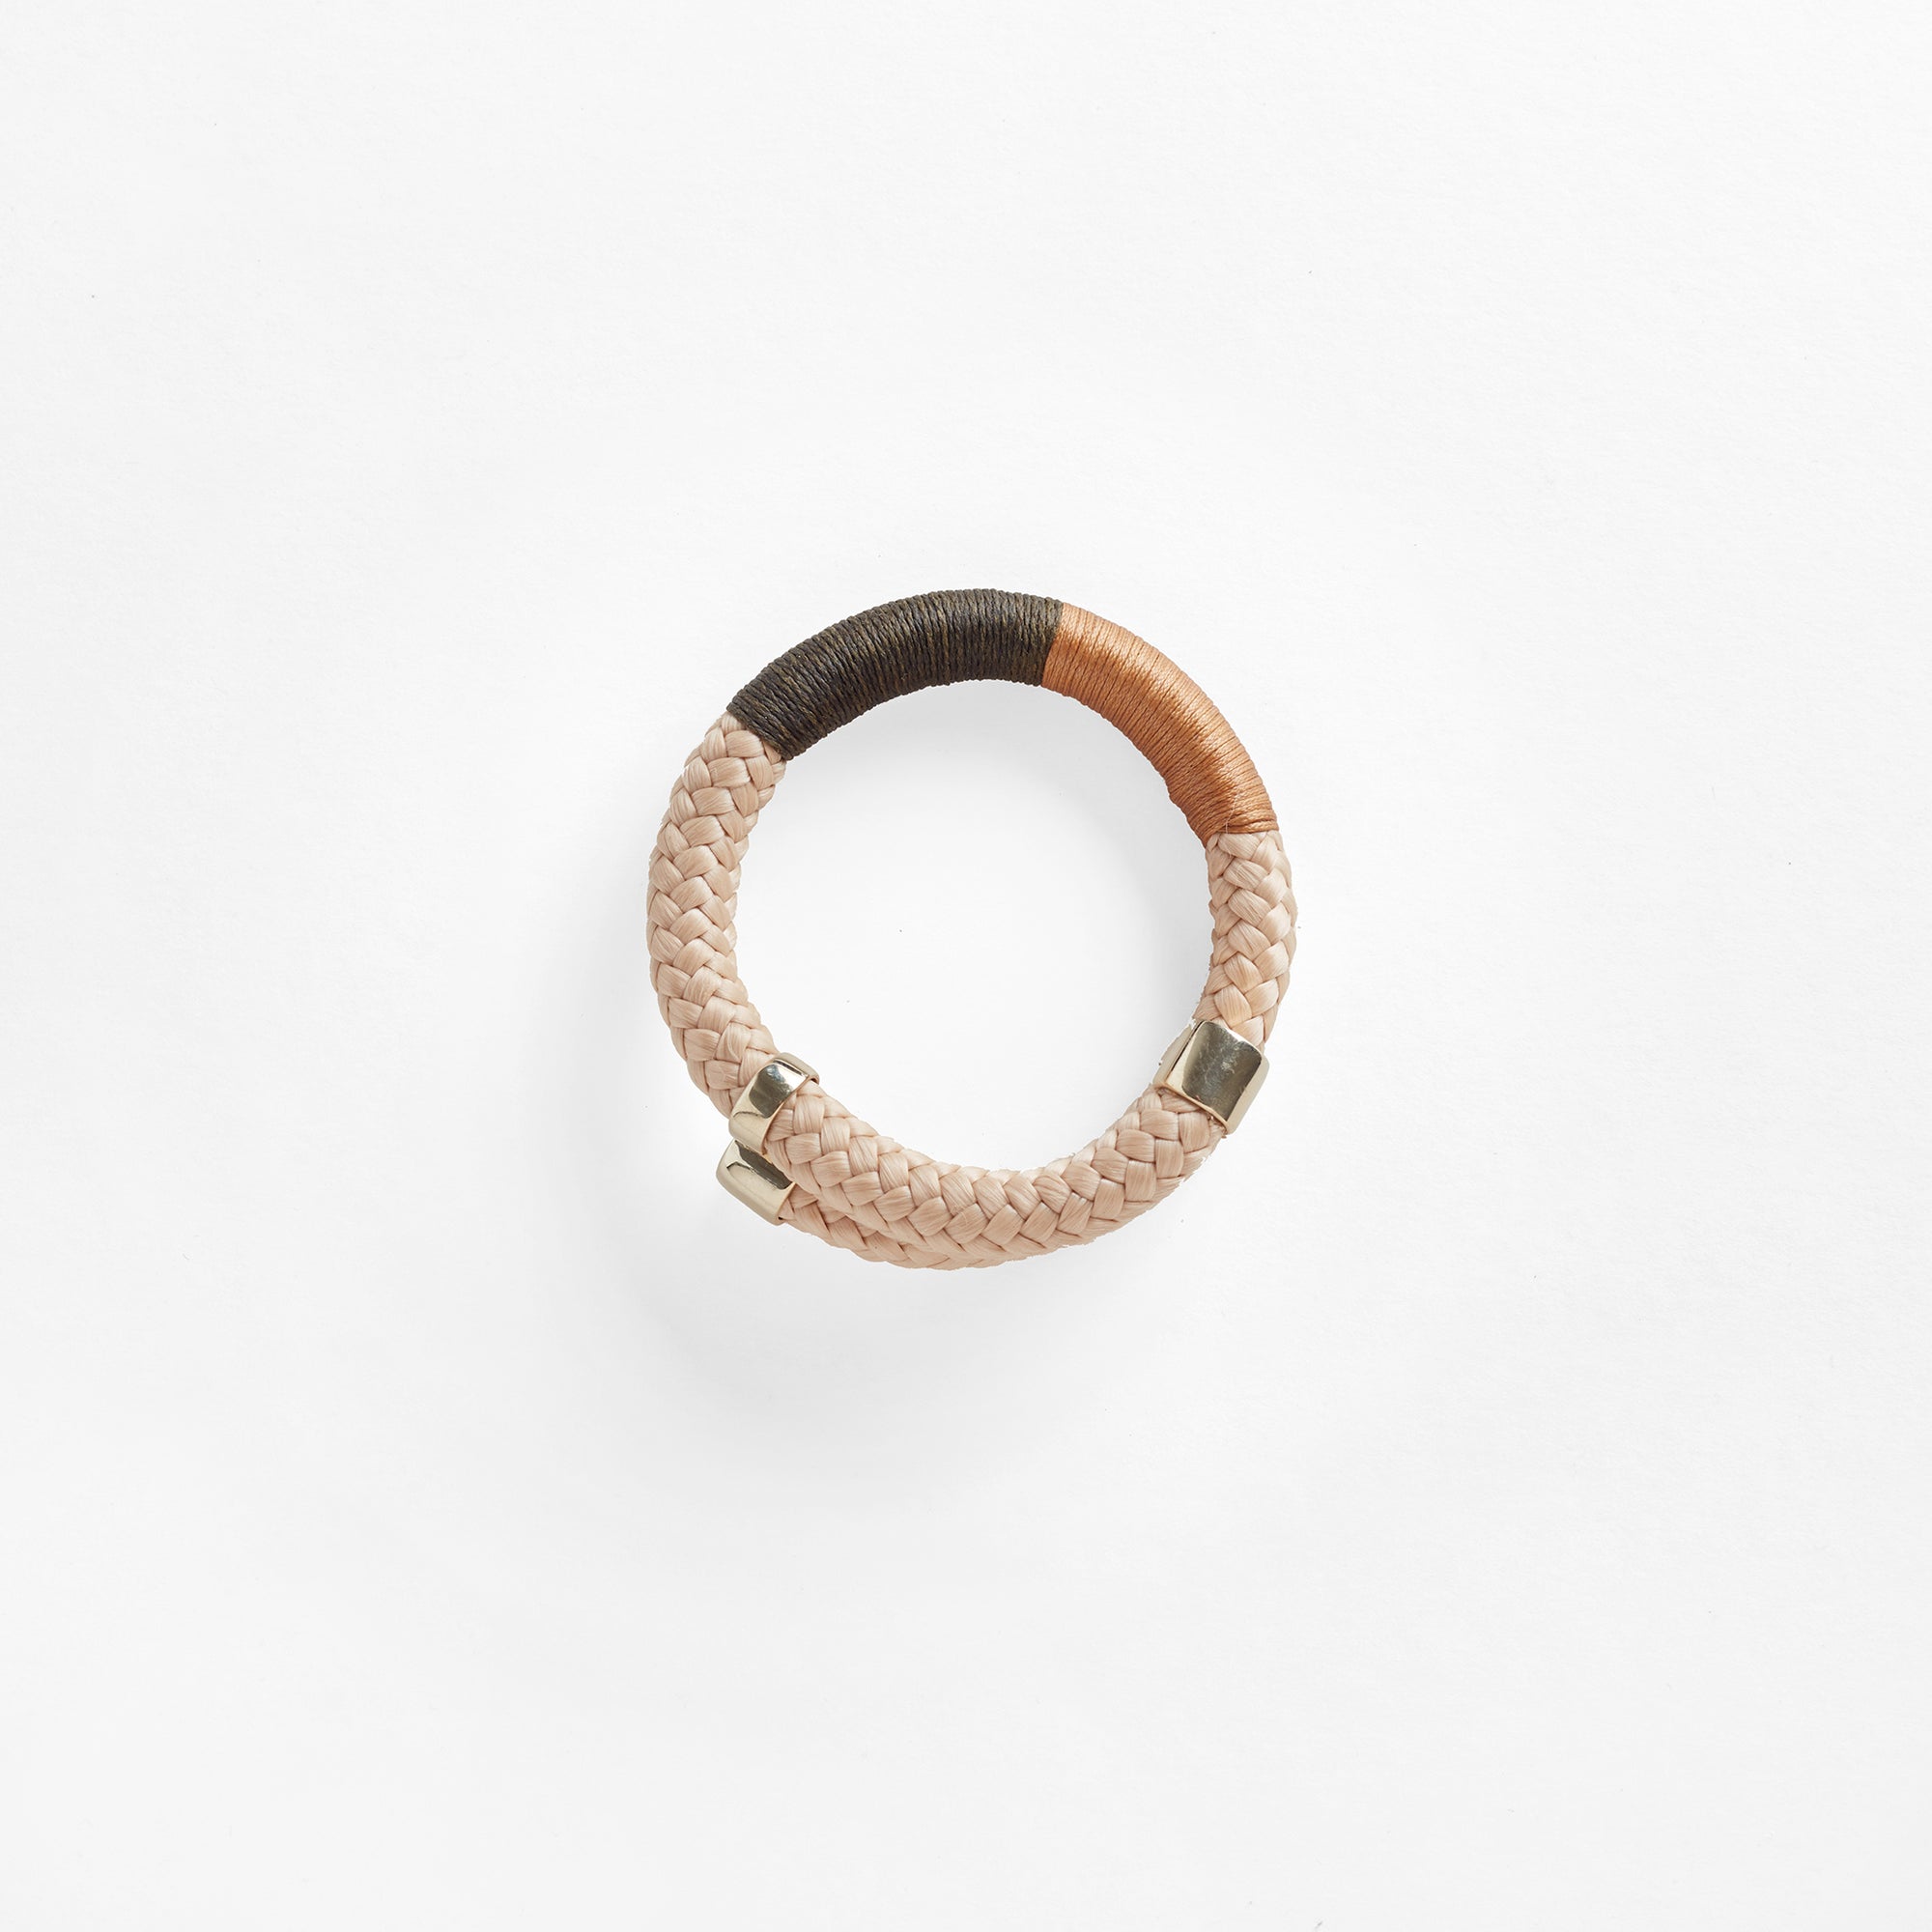 Pichulik | Wrap Rope and Brass Bracelet